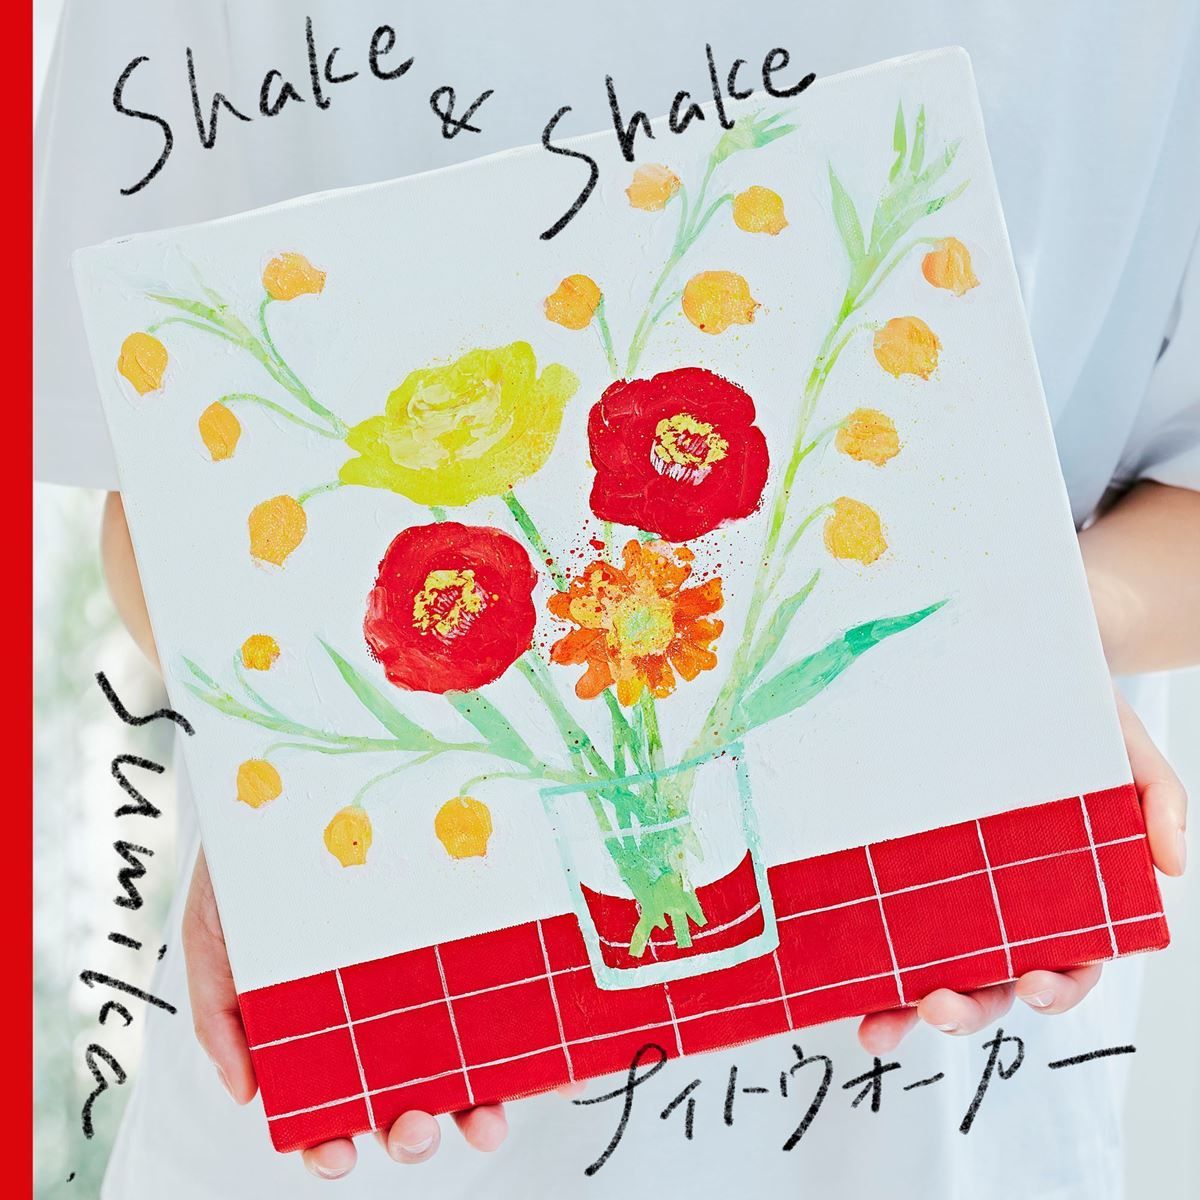 sumika『Shake & Shake / ナイトウォーカー』ジャケット